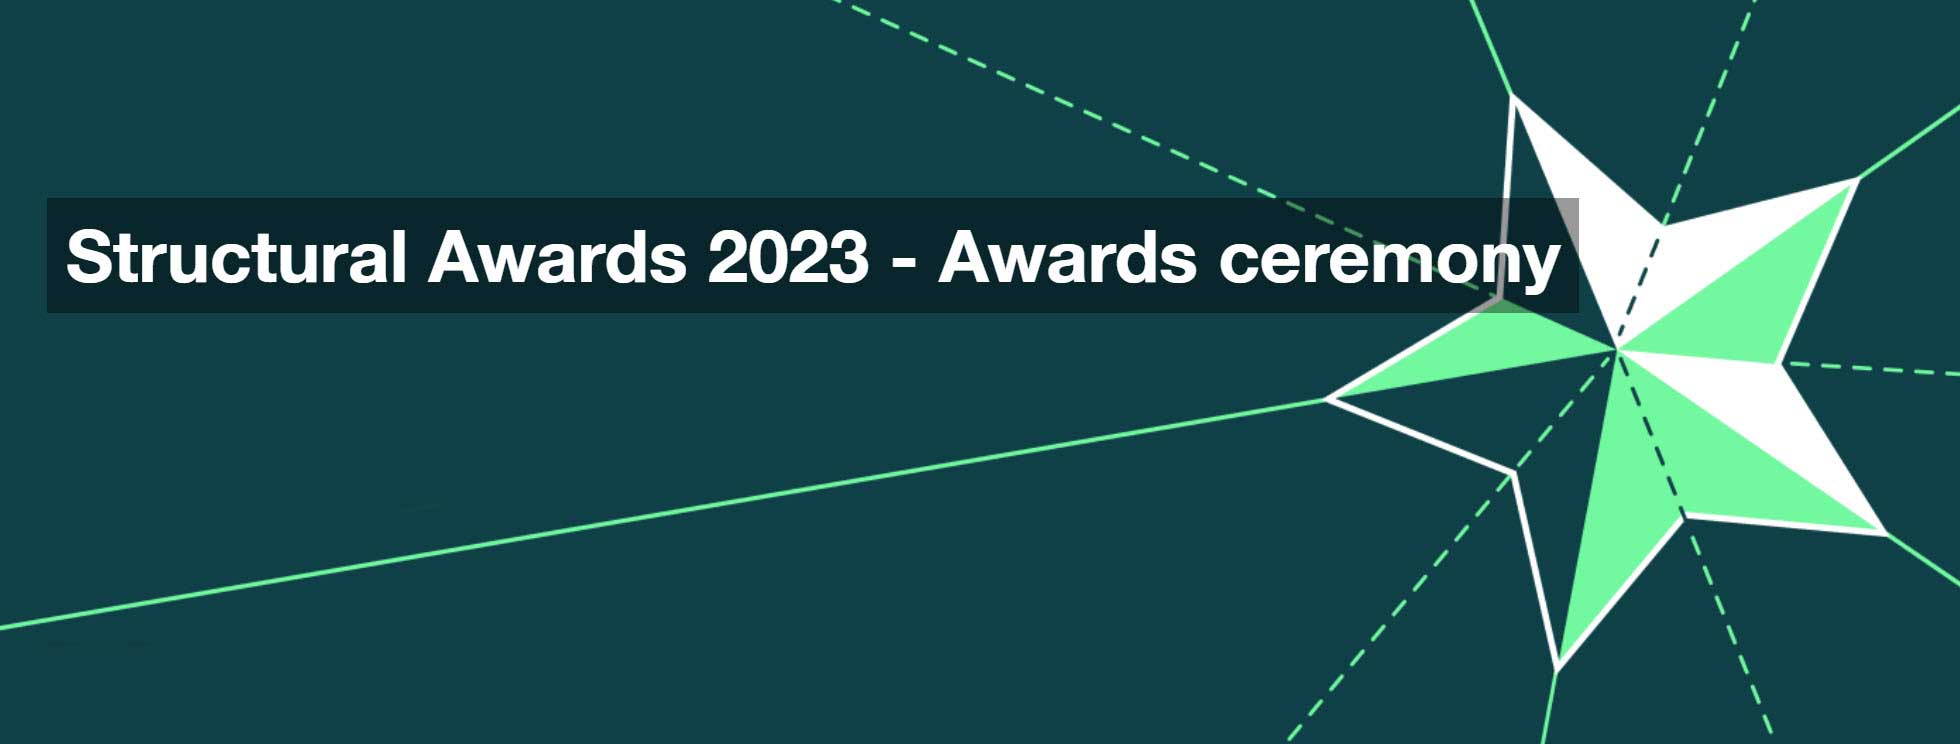 Structural Awards 2023 - IDEA StatiCA UK